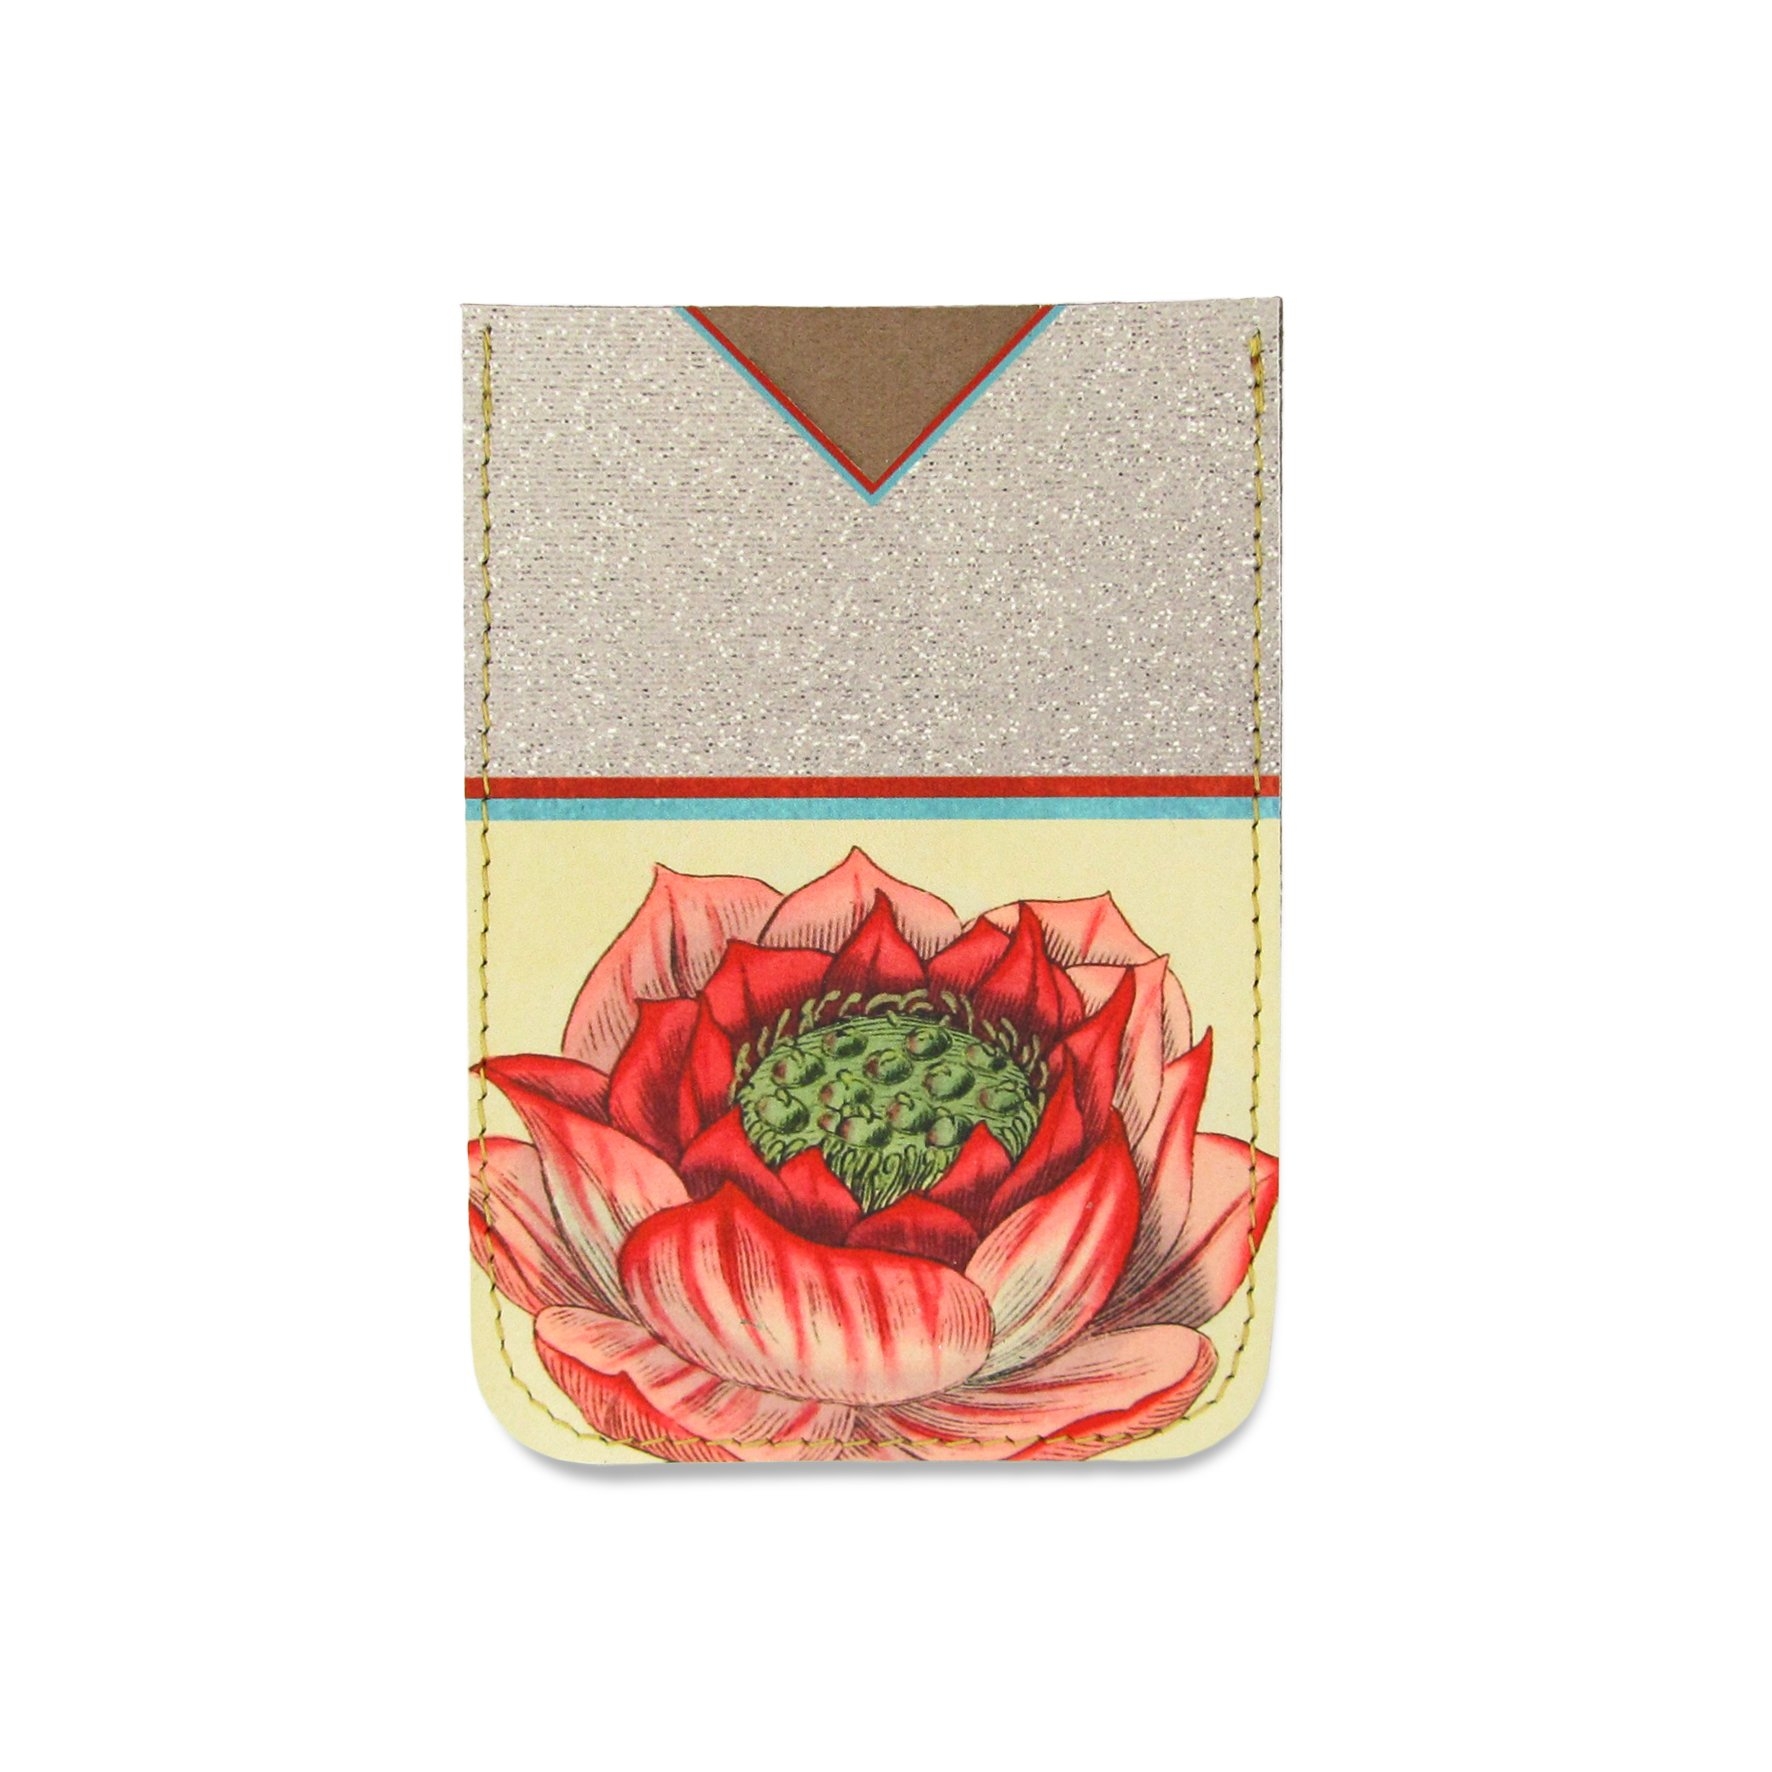 Leather Card Holder / Phone Sticker Wallet Pocket – Lotus Flower – Standard Card Holder / Without personalisation / Pink